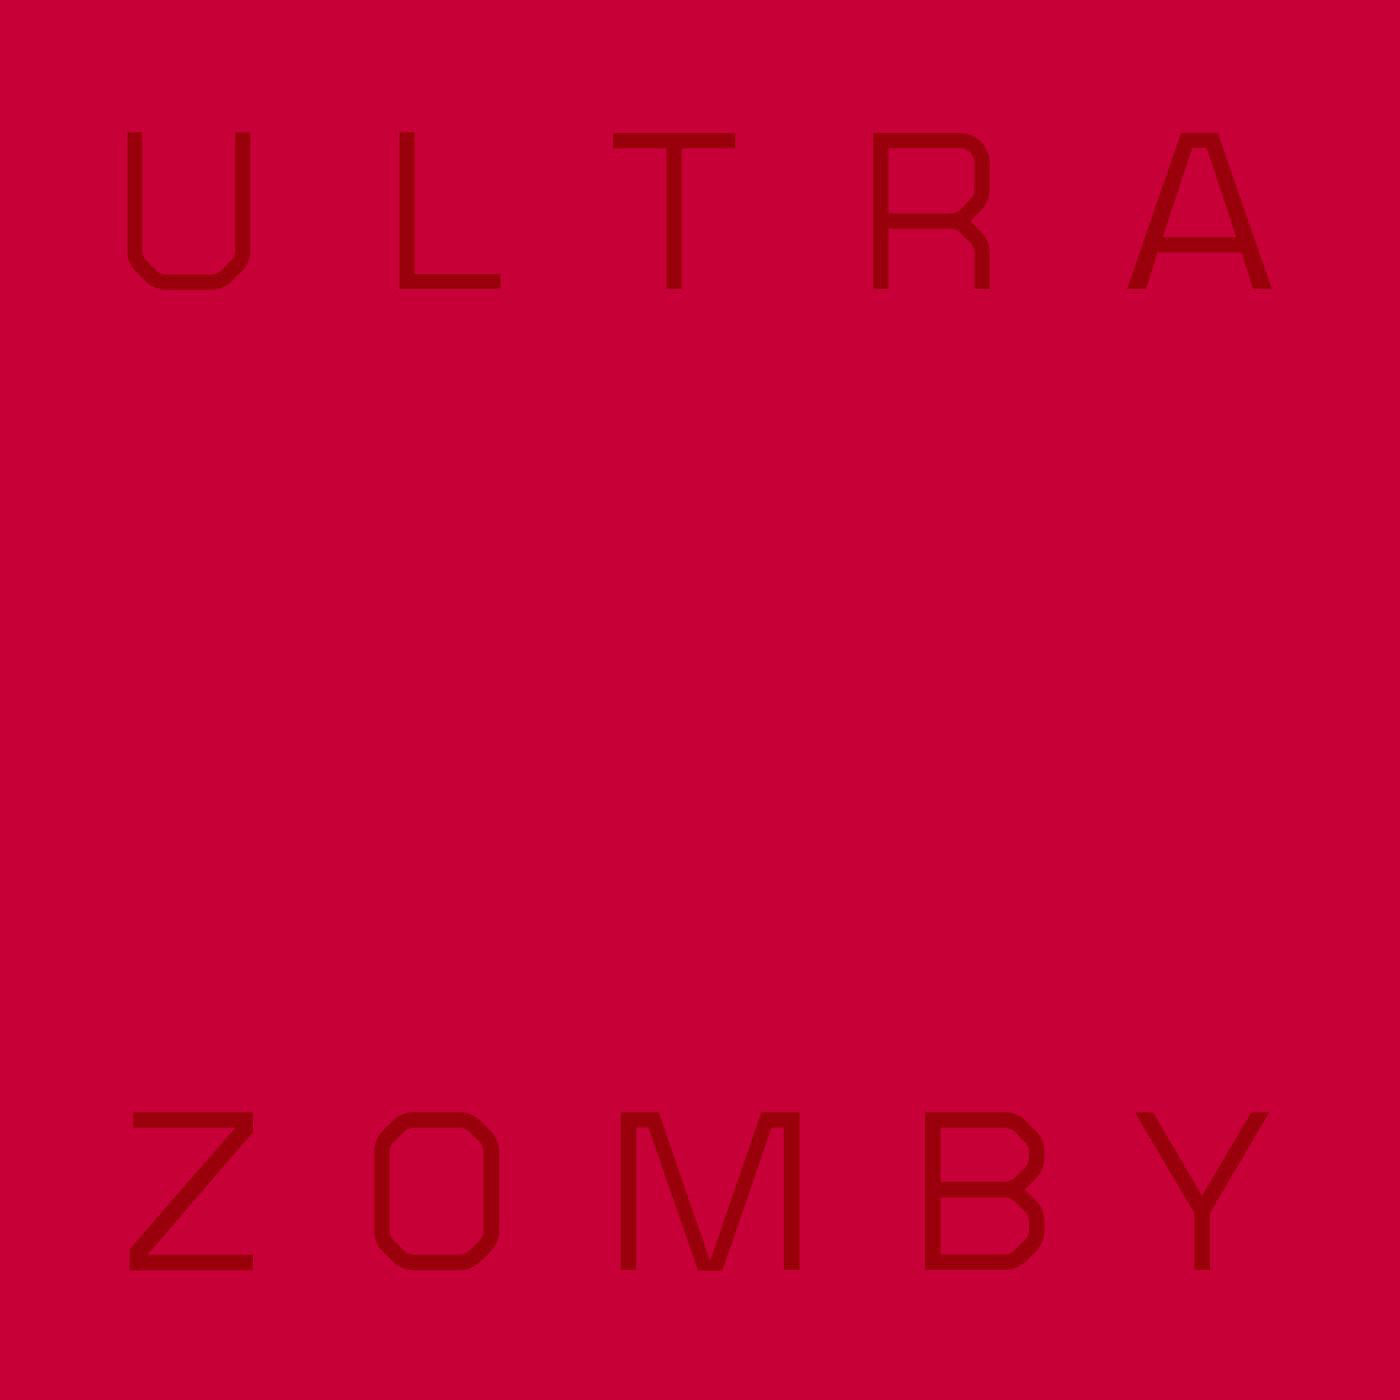 Zomby - Ultra LP